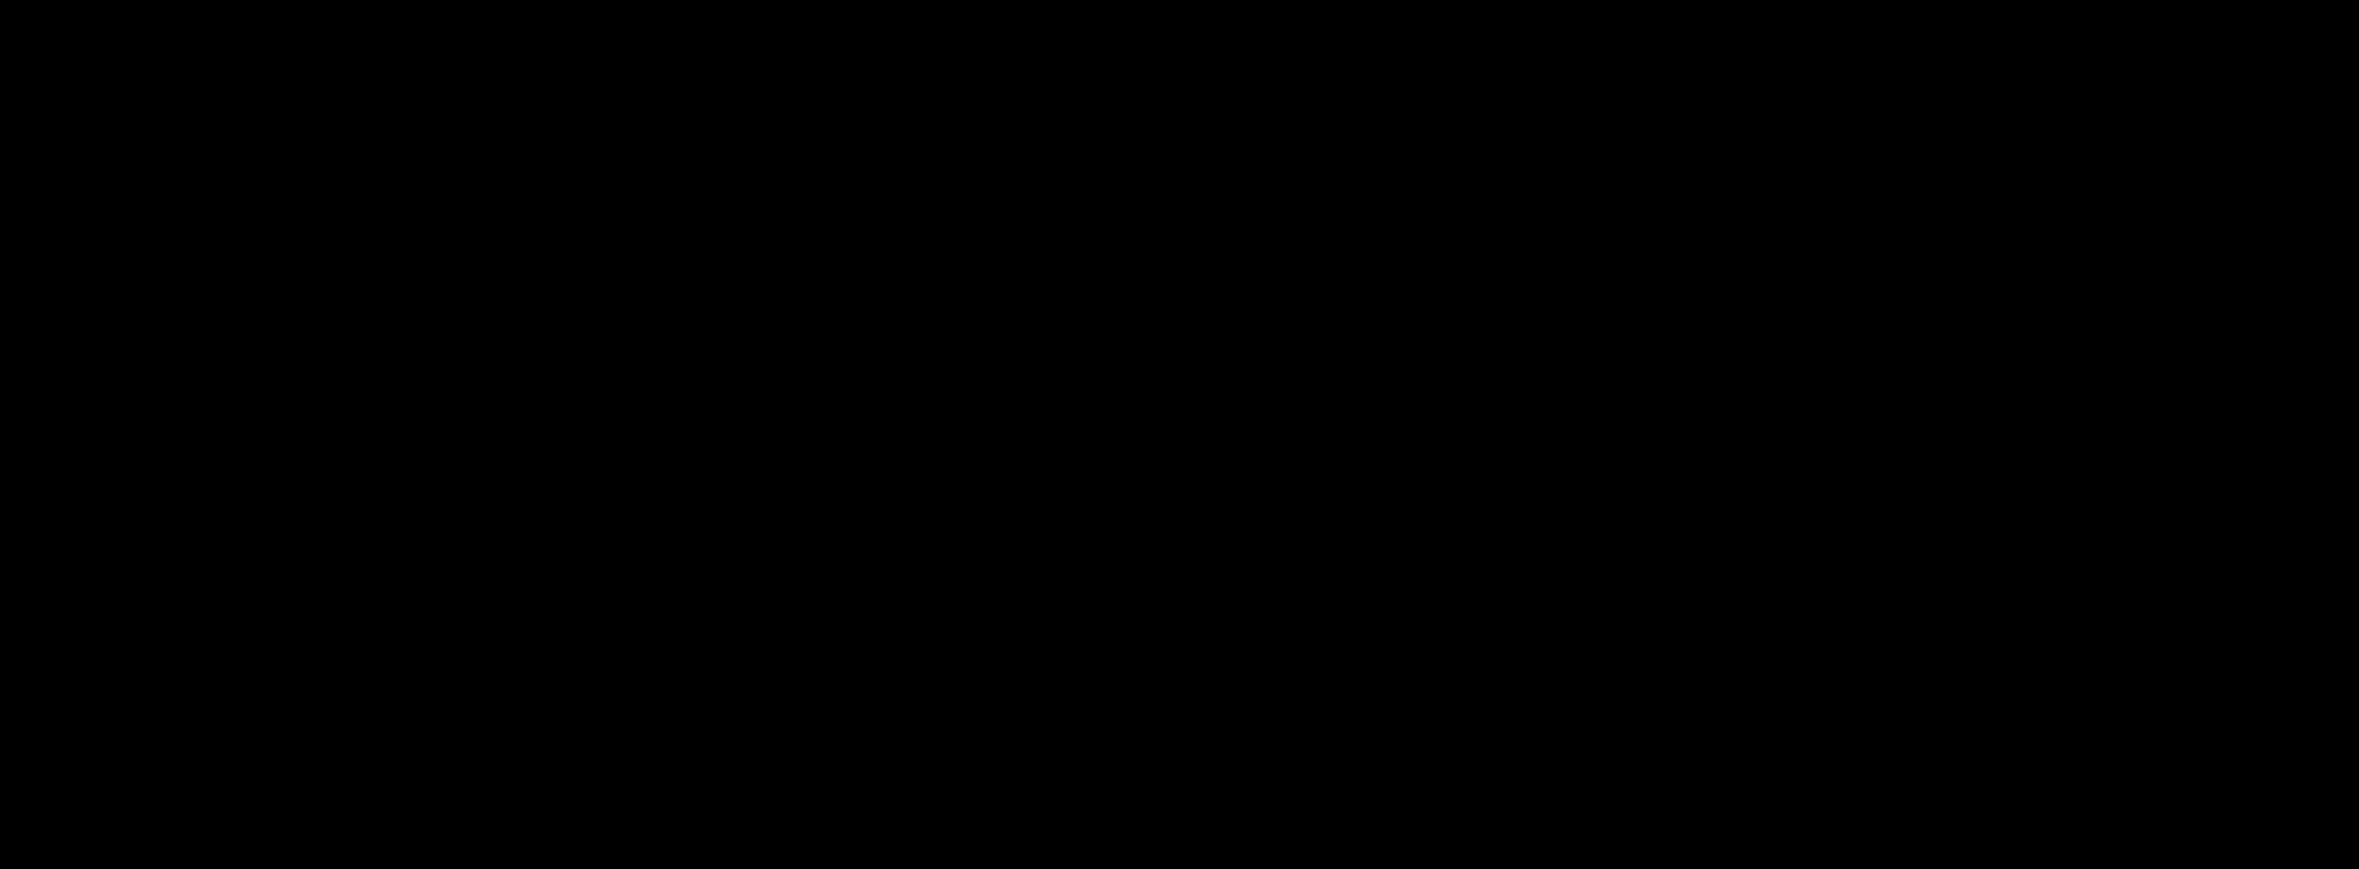 Yankees Logo Black Background PNG image